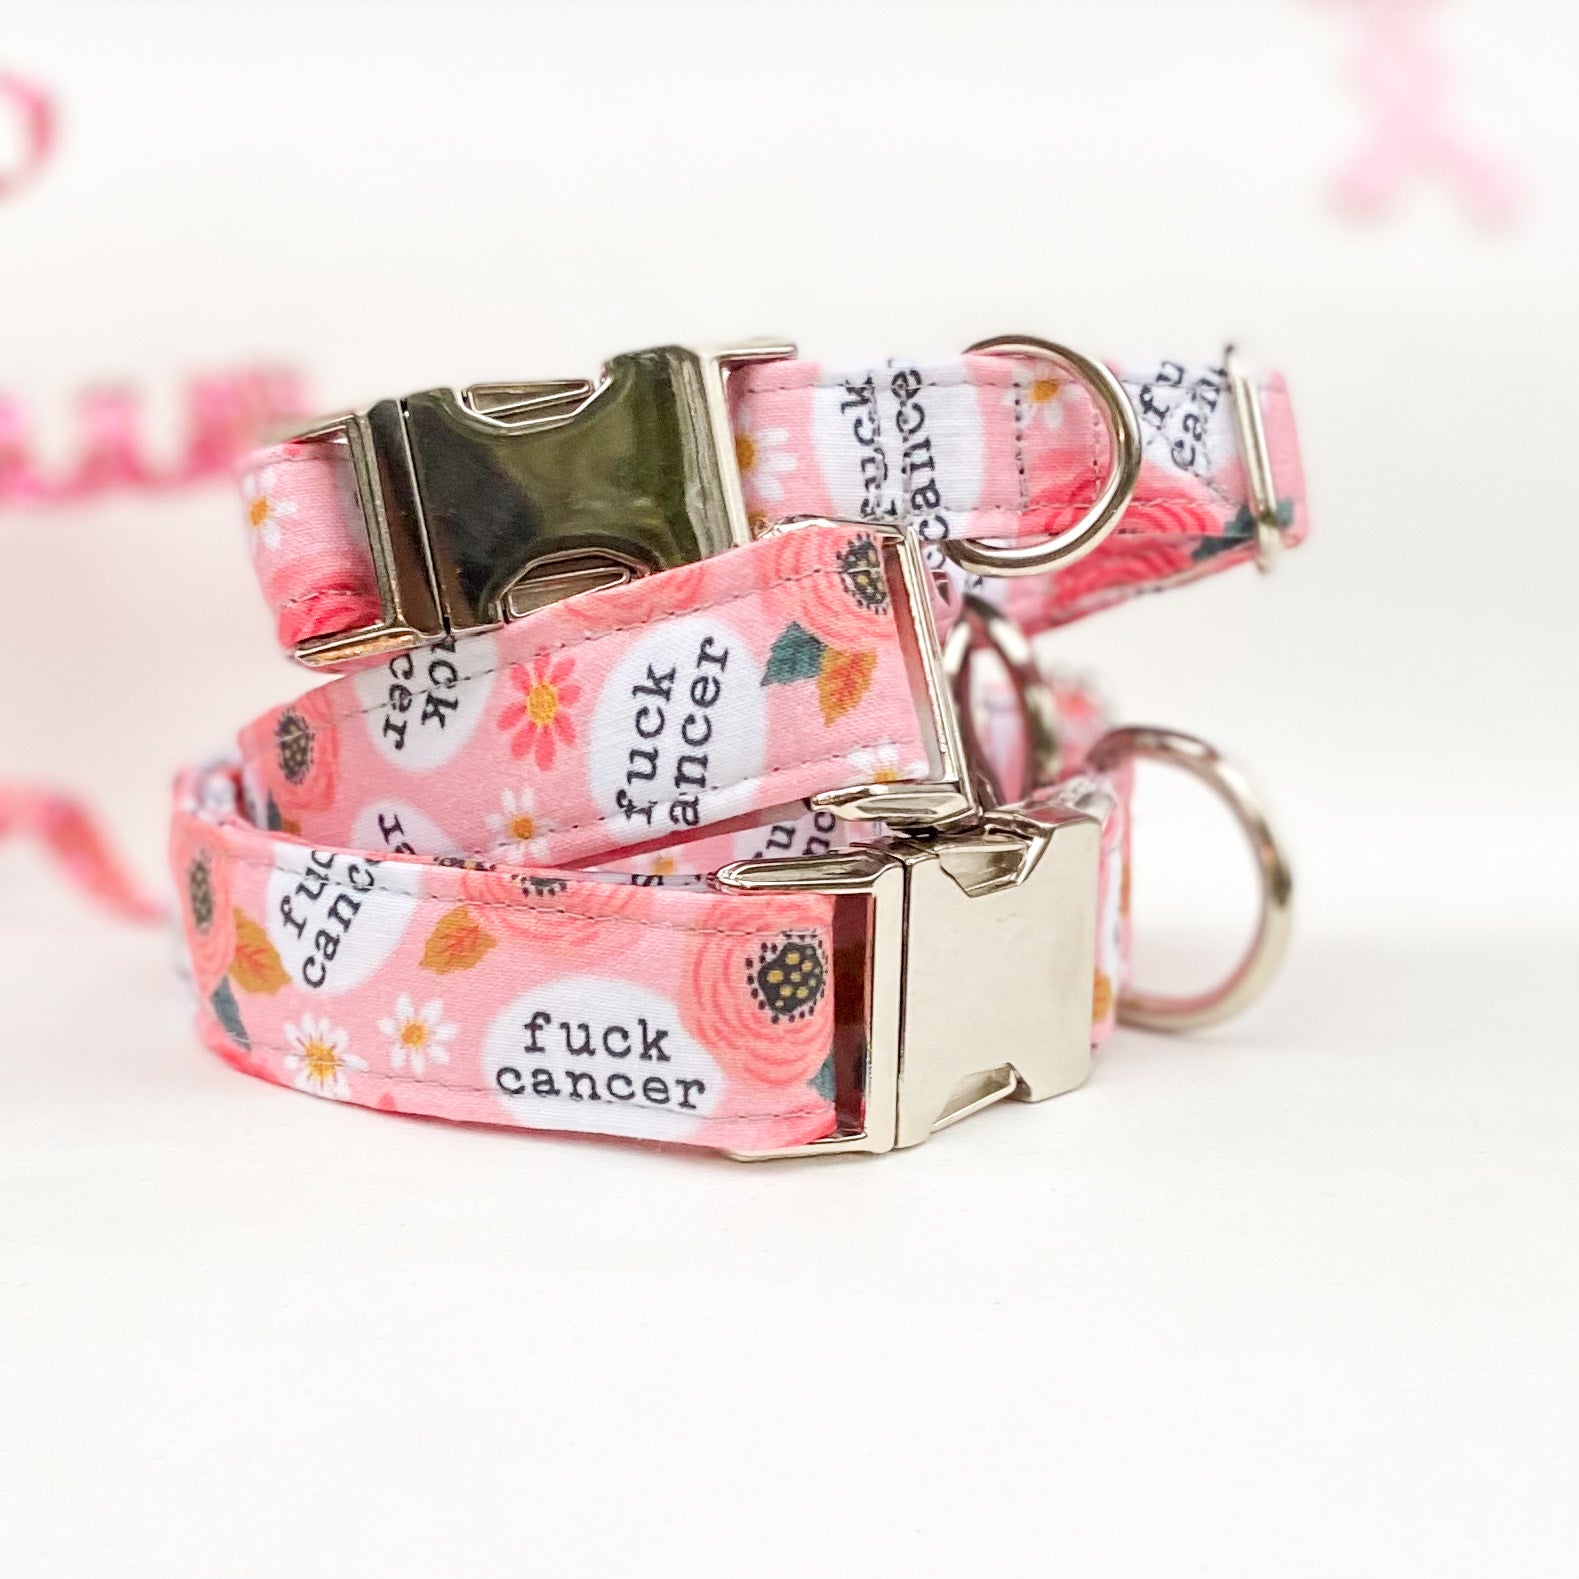 Fuck Cancer pink floral breast cancer awareness dog collar